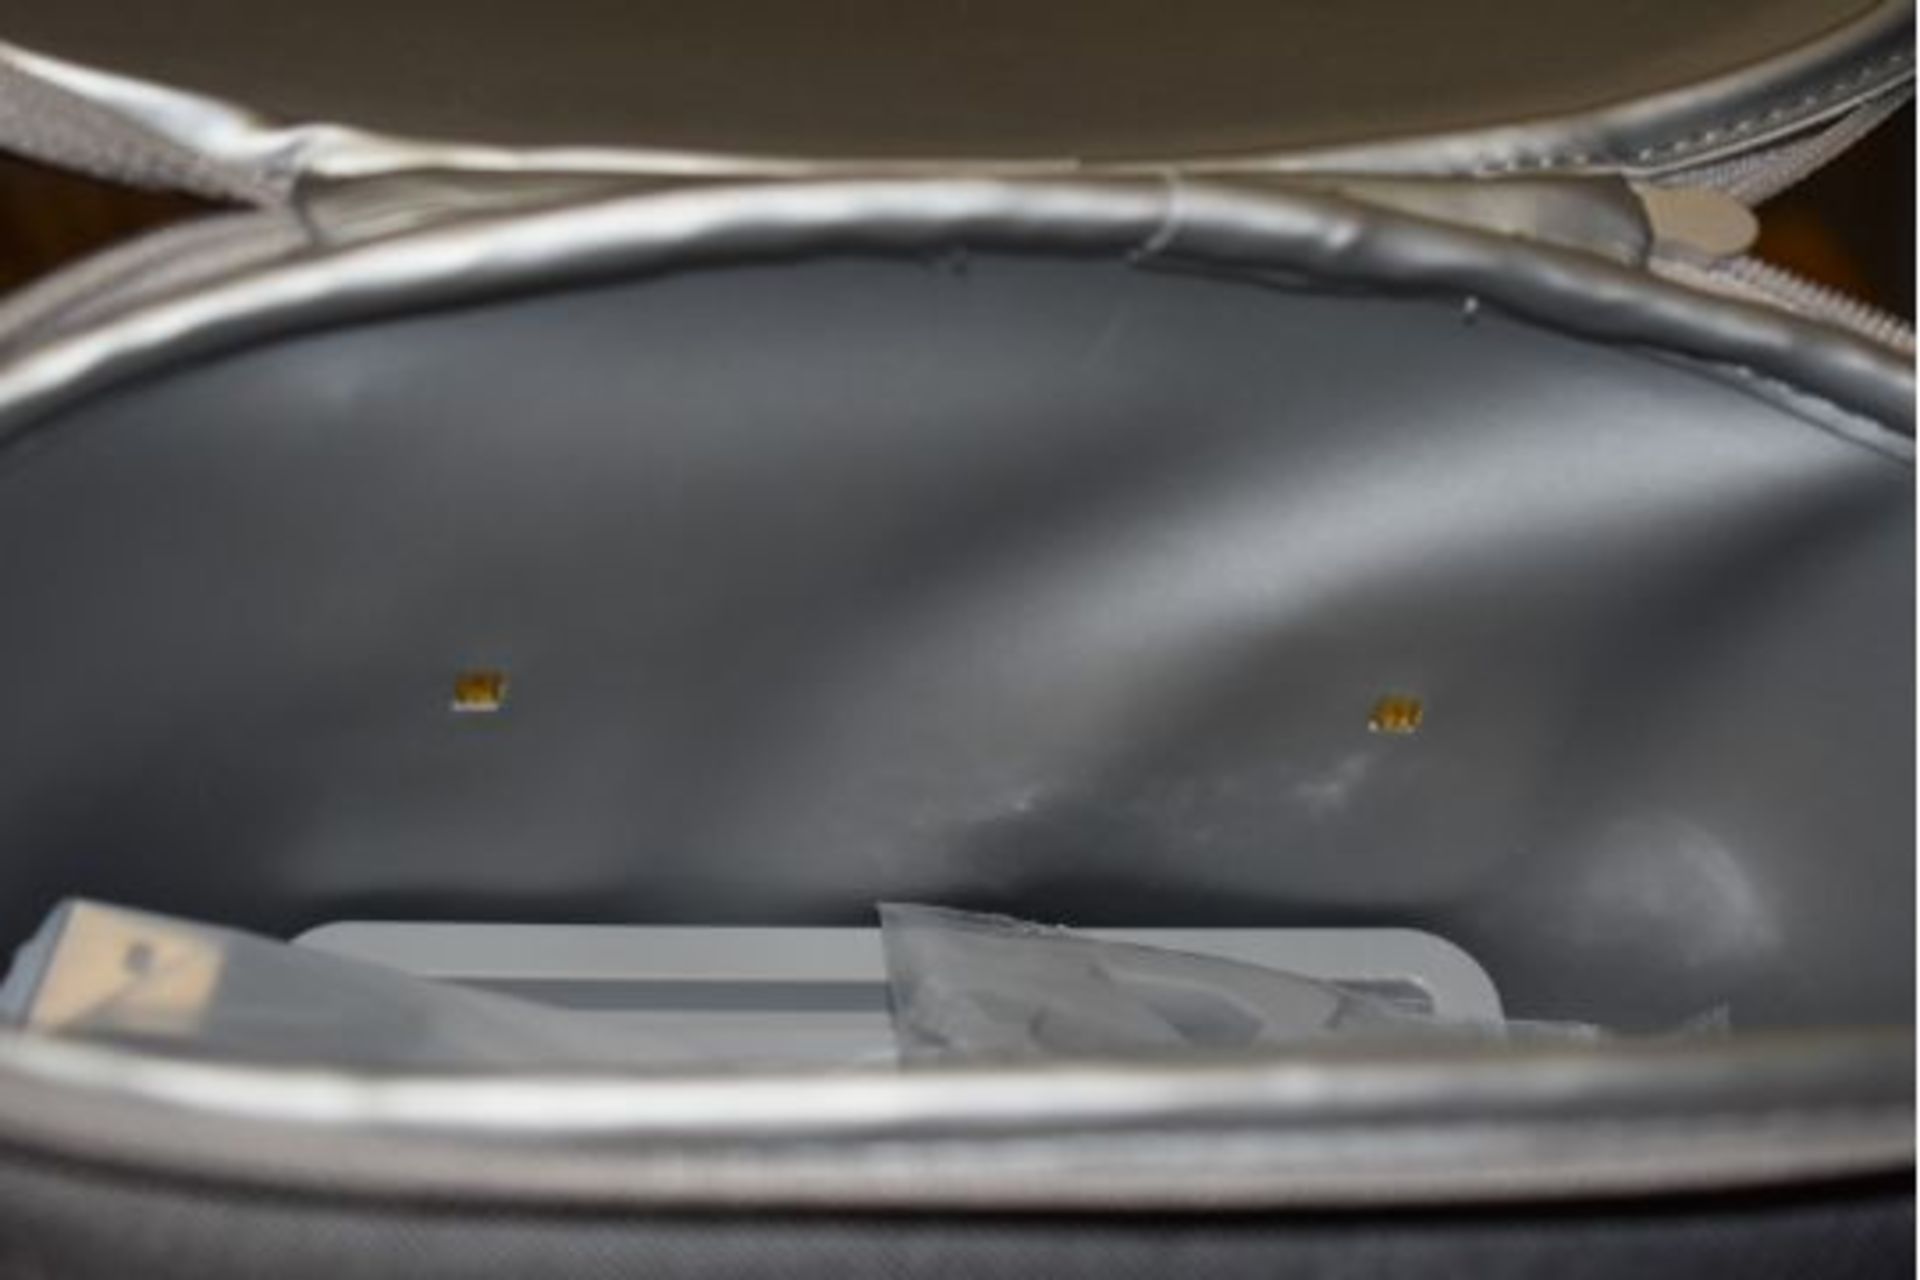 1 x Homedics UV Clean Portable Sanitiser Bag - Kills Upto 99.9% of Bacteria & Viruses in Just 60 - Image 6 of 24